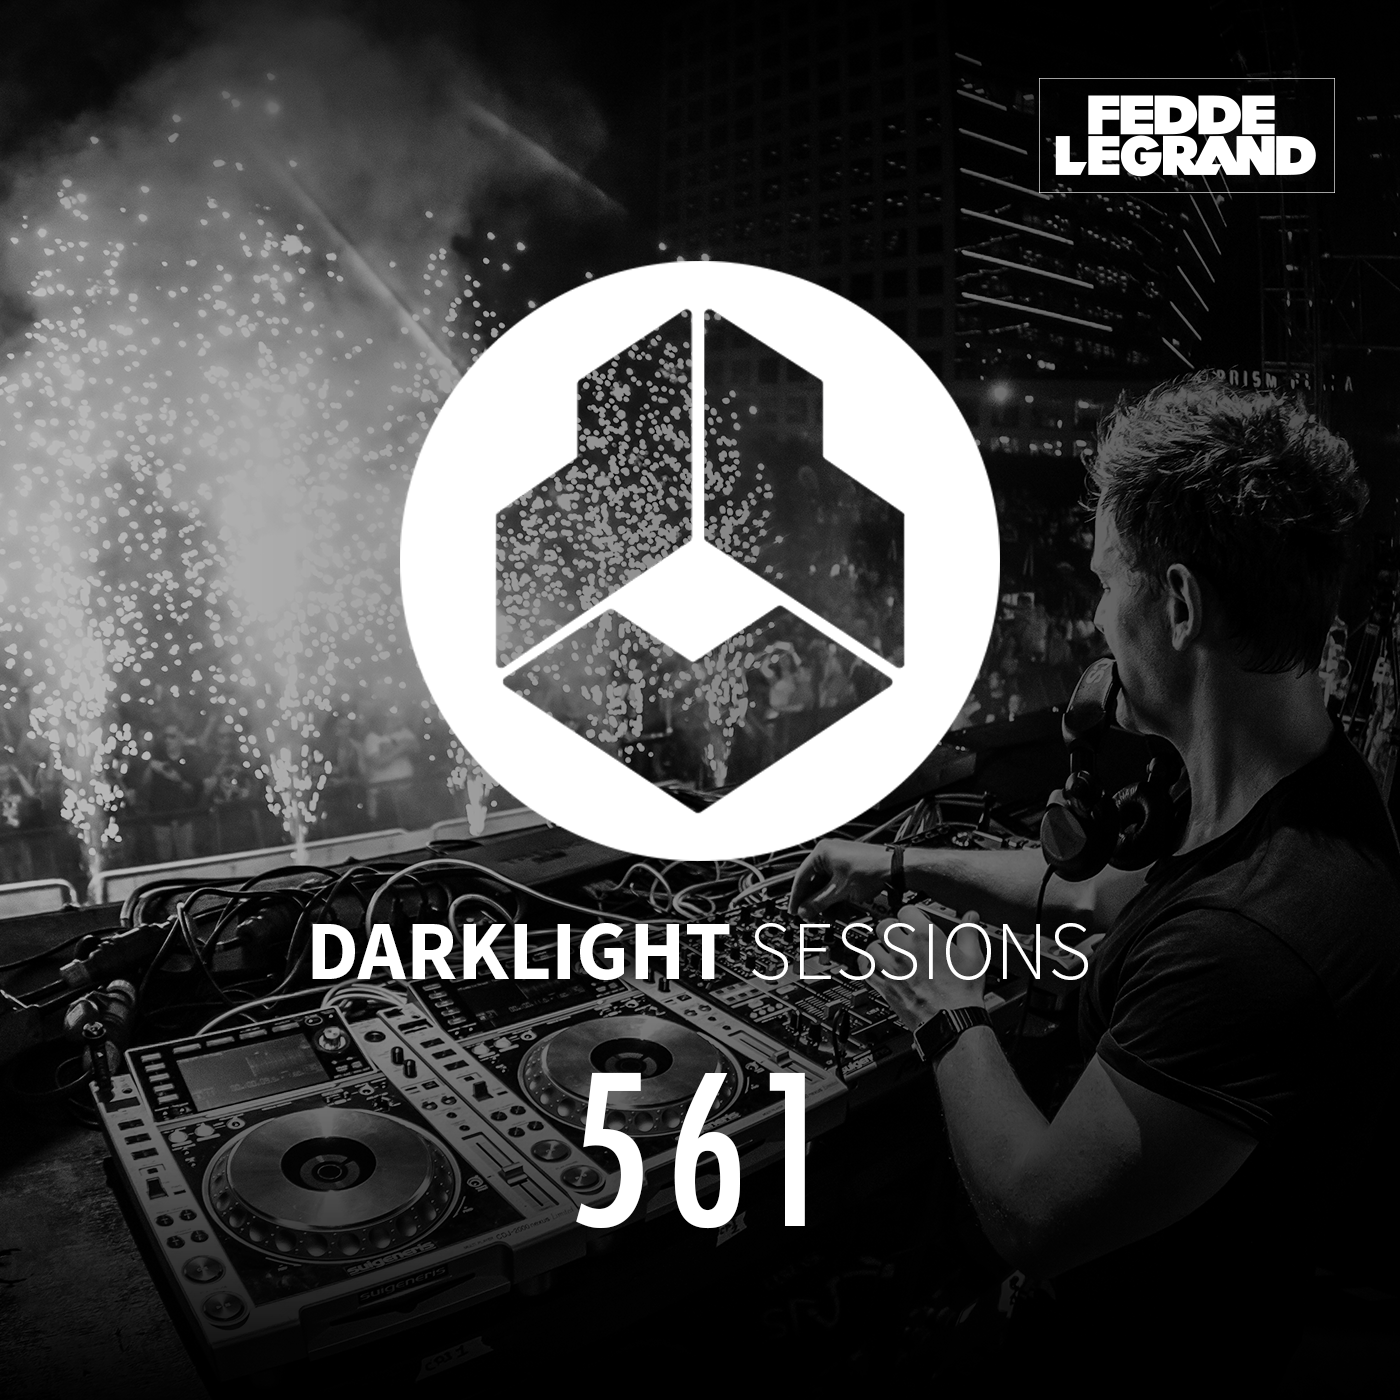 Darklight Sessions 561